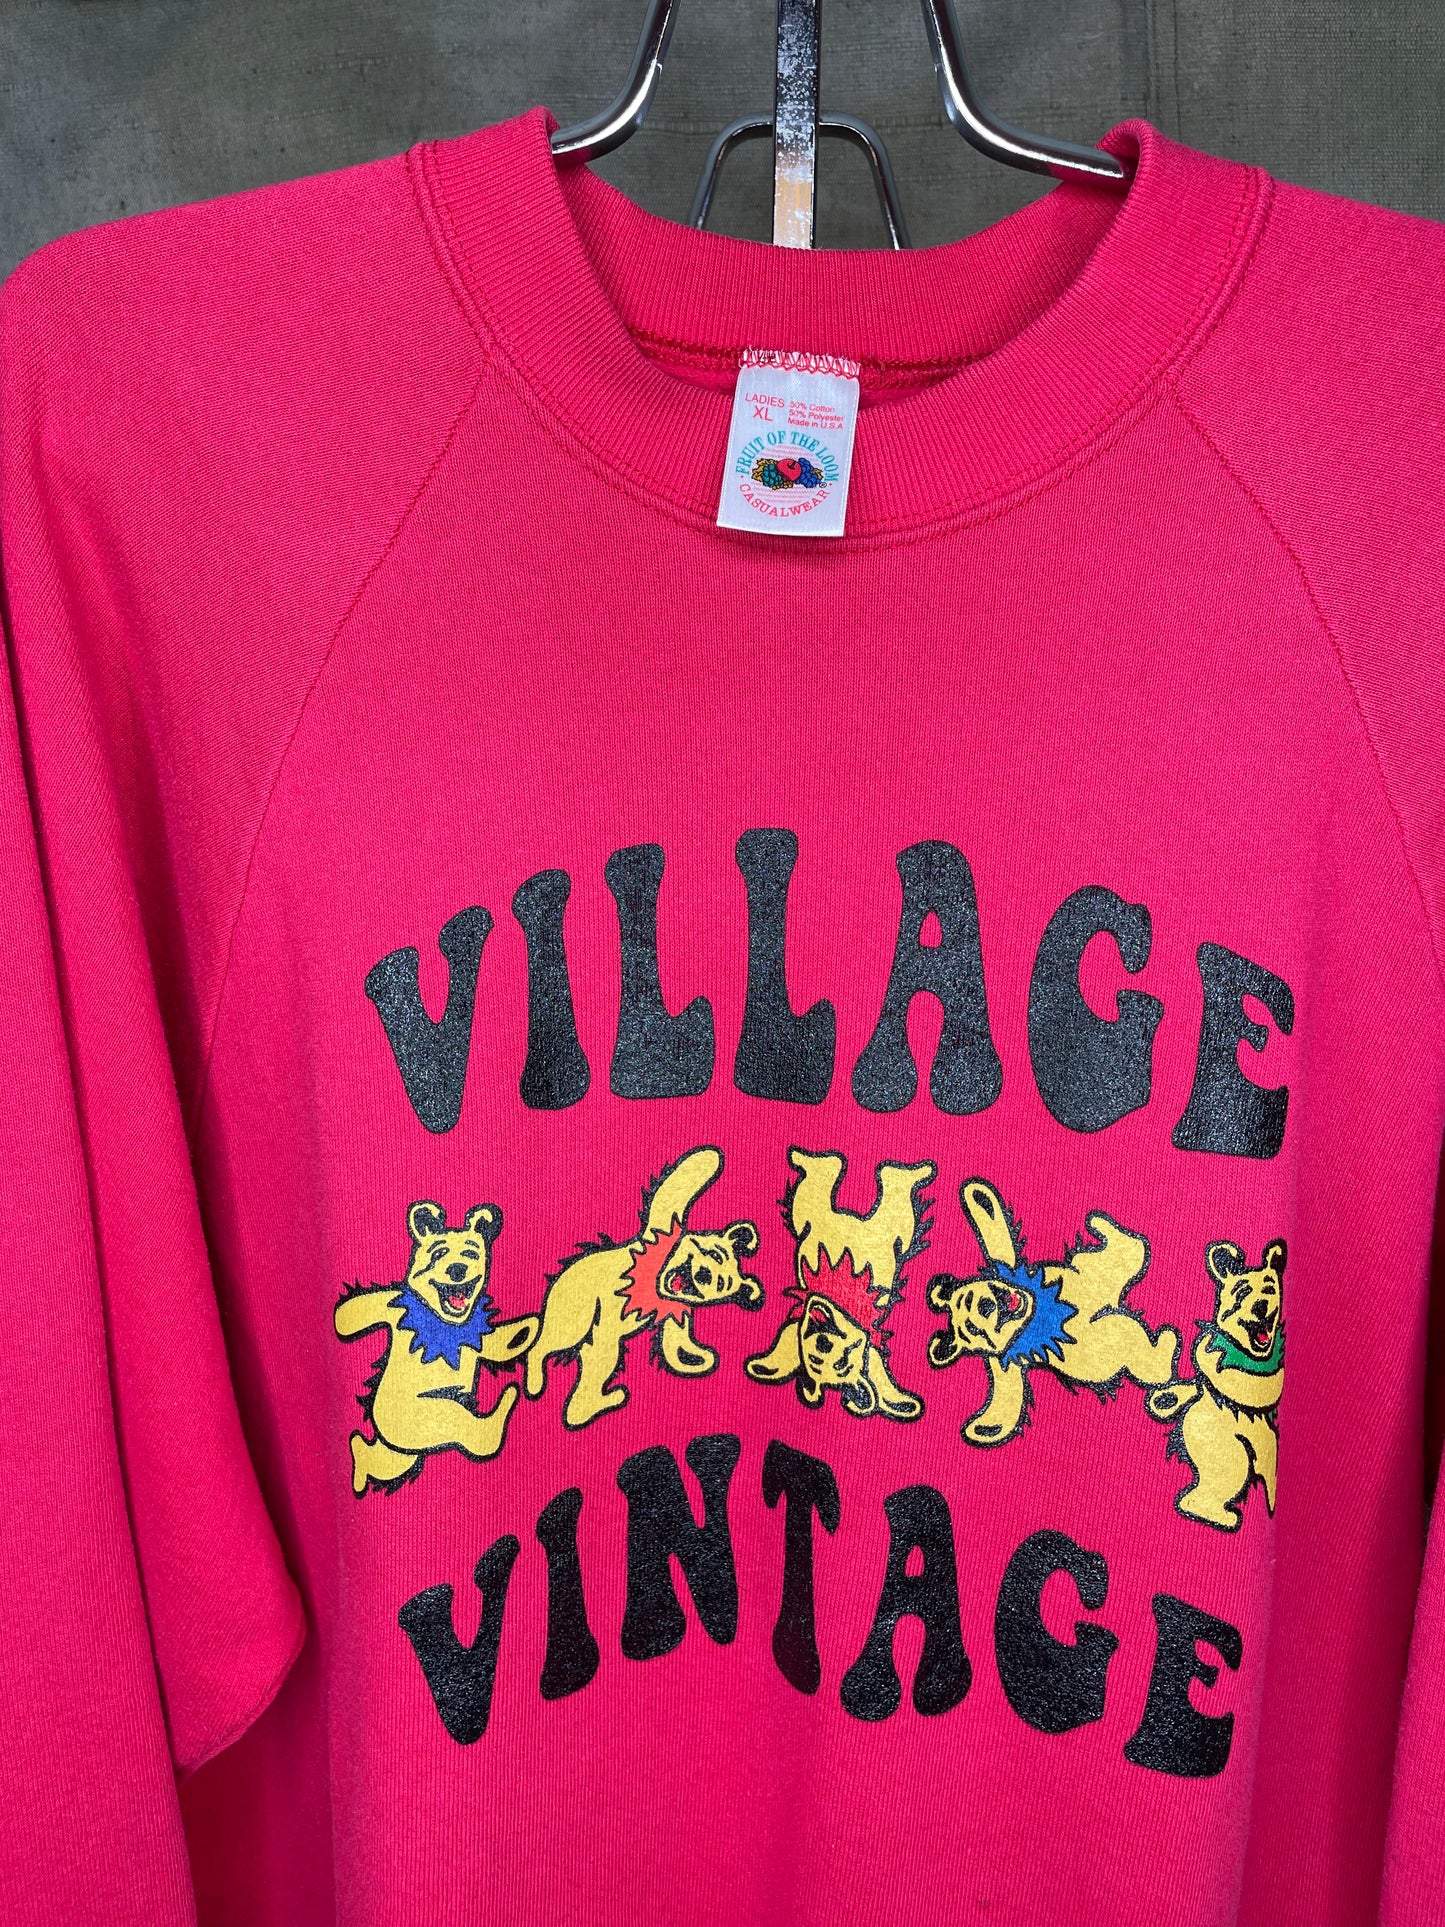 Village Vintage Frolicking Bear Logo on Hand Sourced Vintage Sweatshirt Blank L/XL